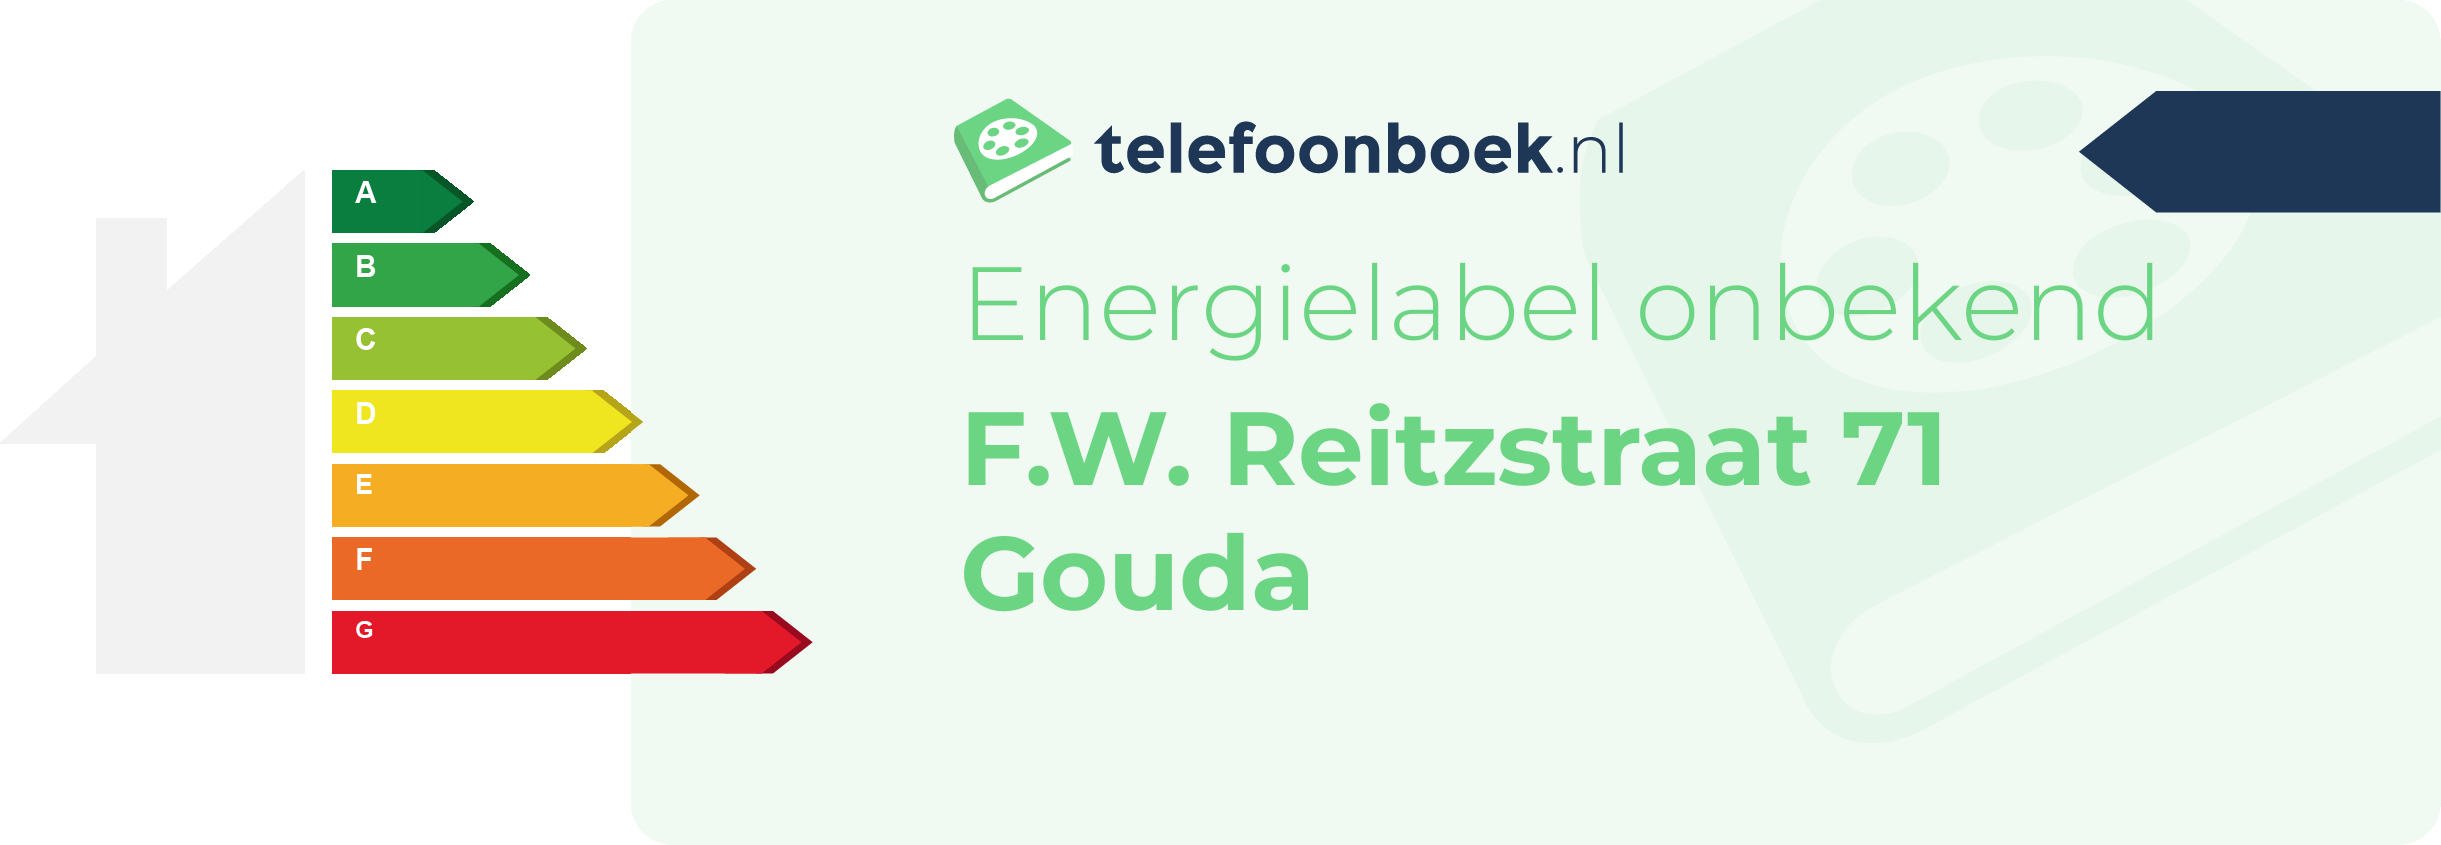 Energielabel F.W. Reitzstraat 71 Gouda